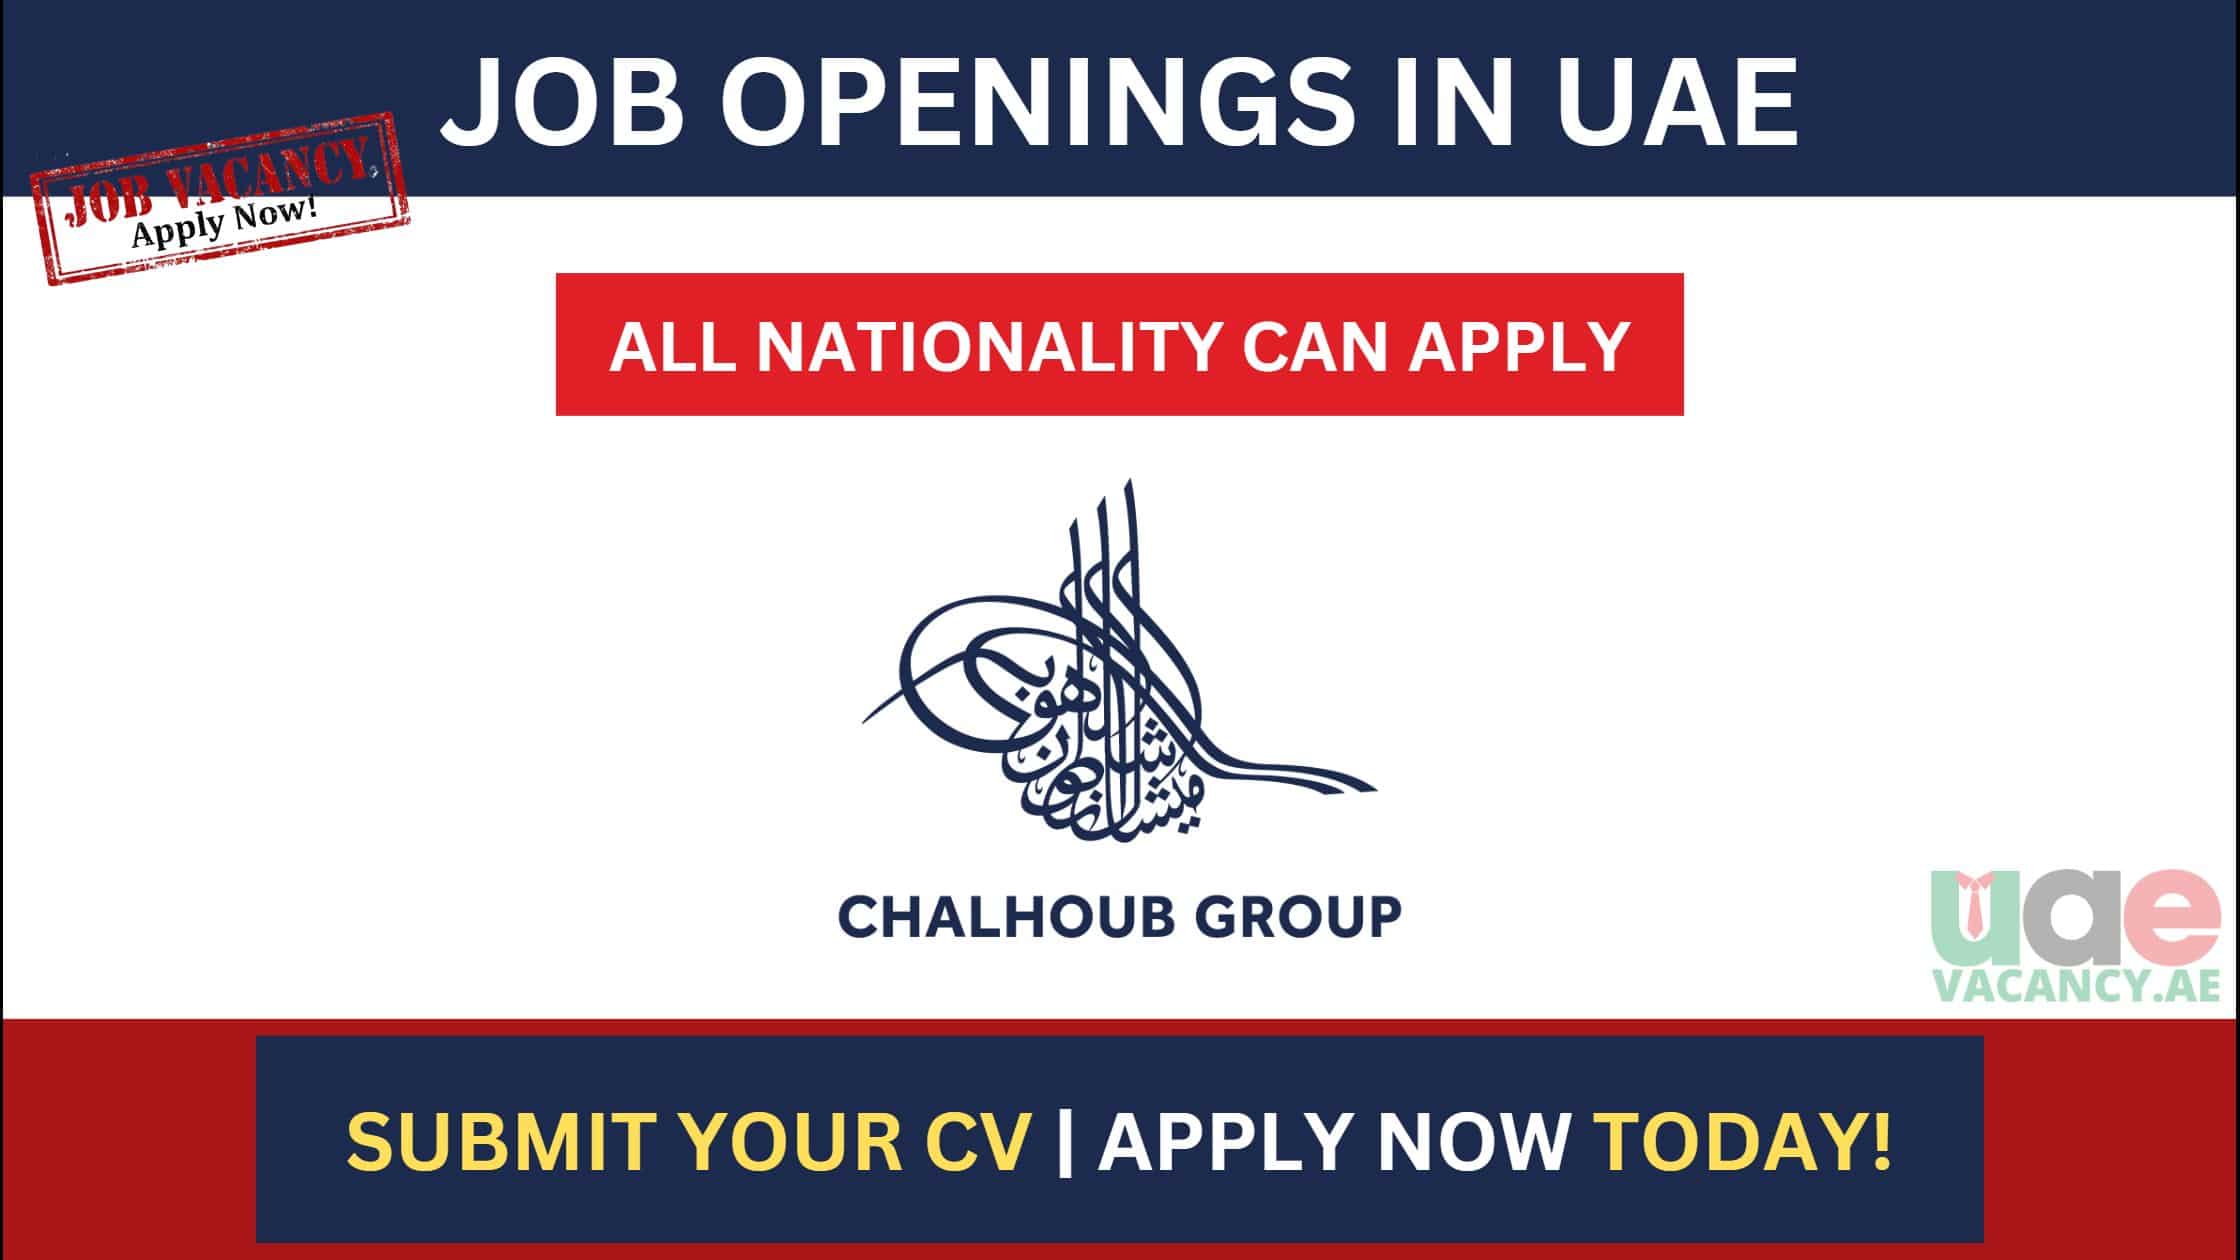 Chalhoub Group Careers in UAE